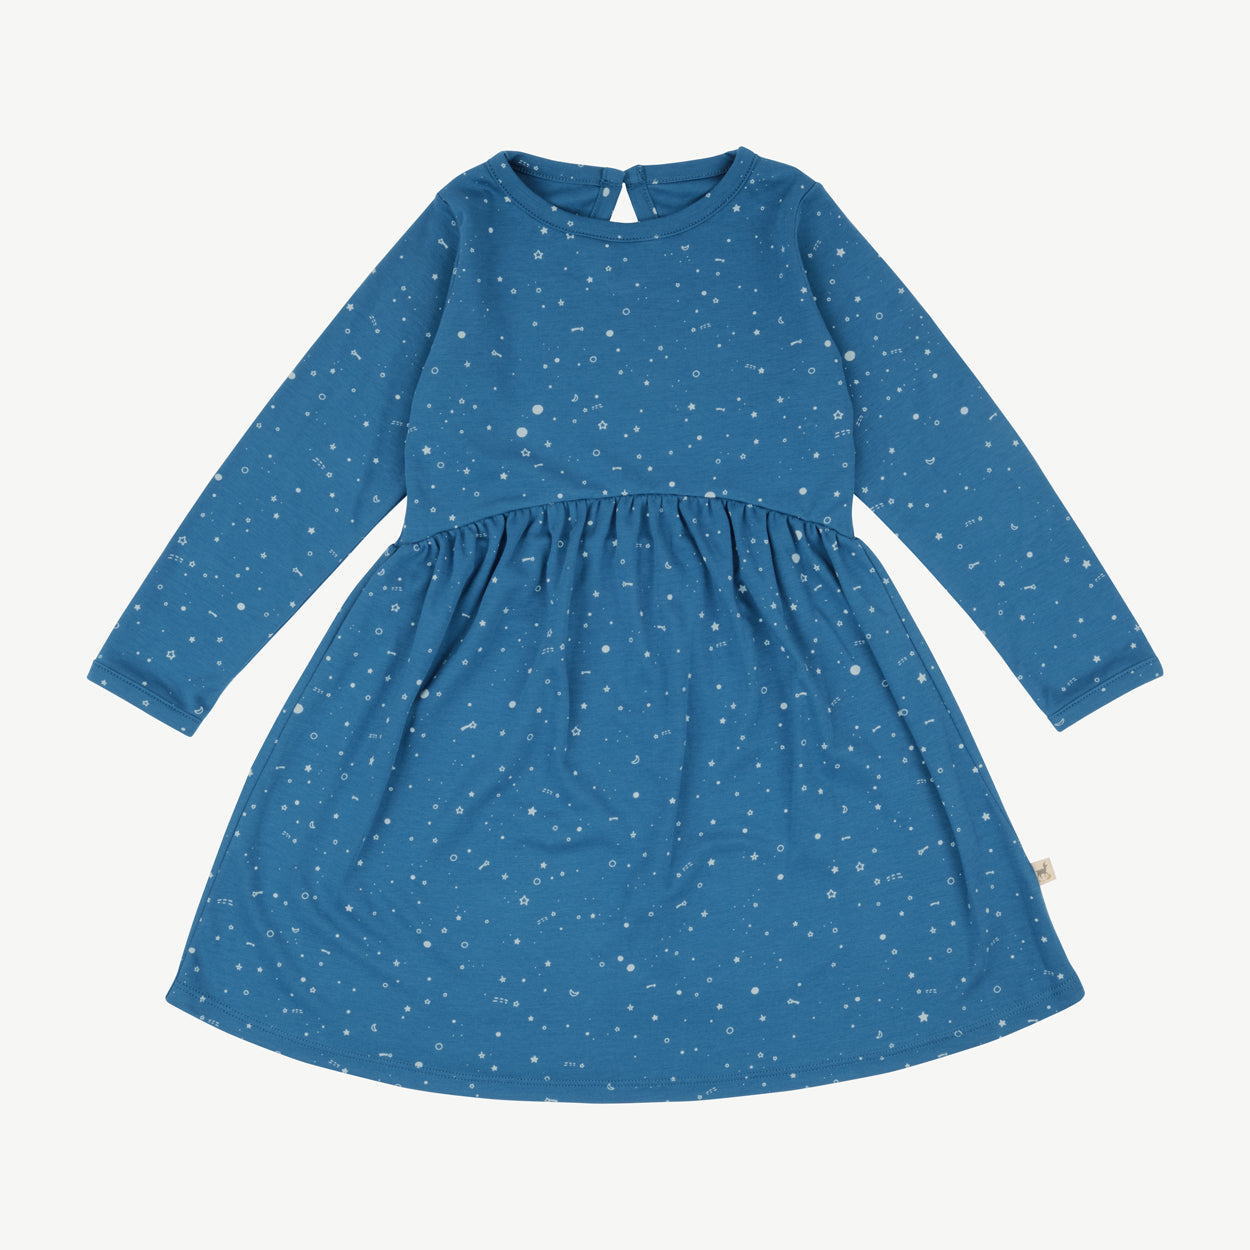 'close to the stars' dark blue interlock dress